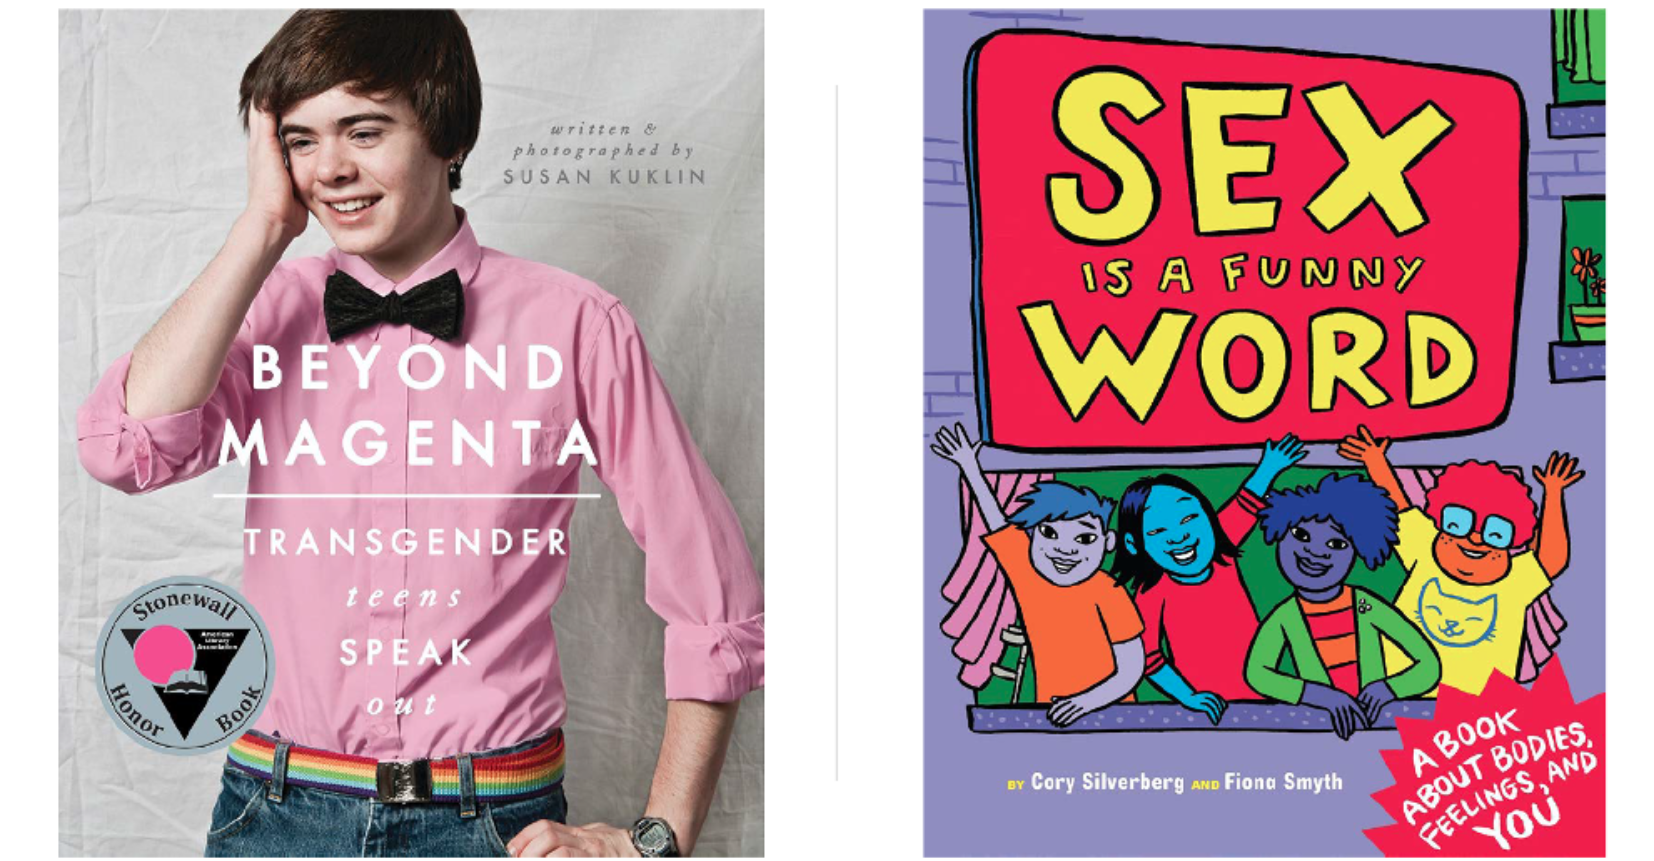 Capas dos livros Beyond Magenta: Transgender Teens Speak Out (2014) e Sex is a Funny Word (2015)